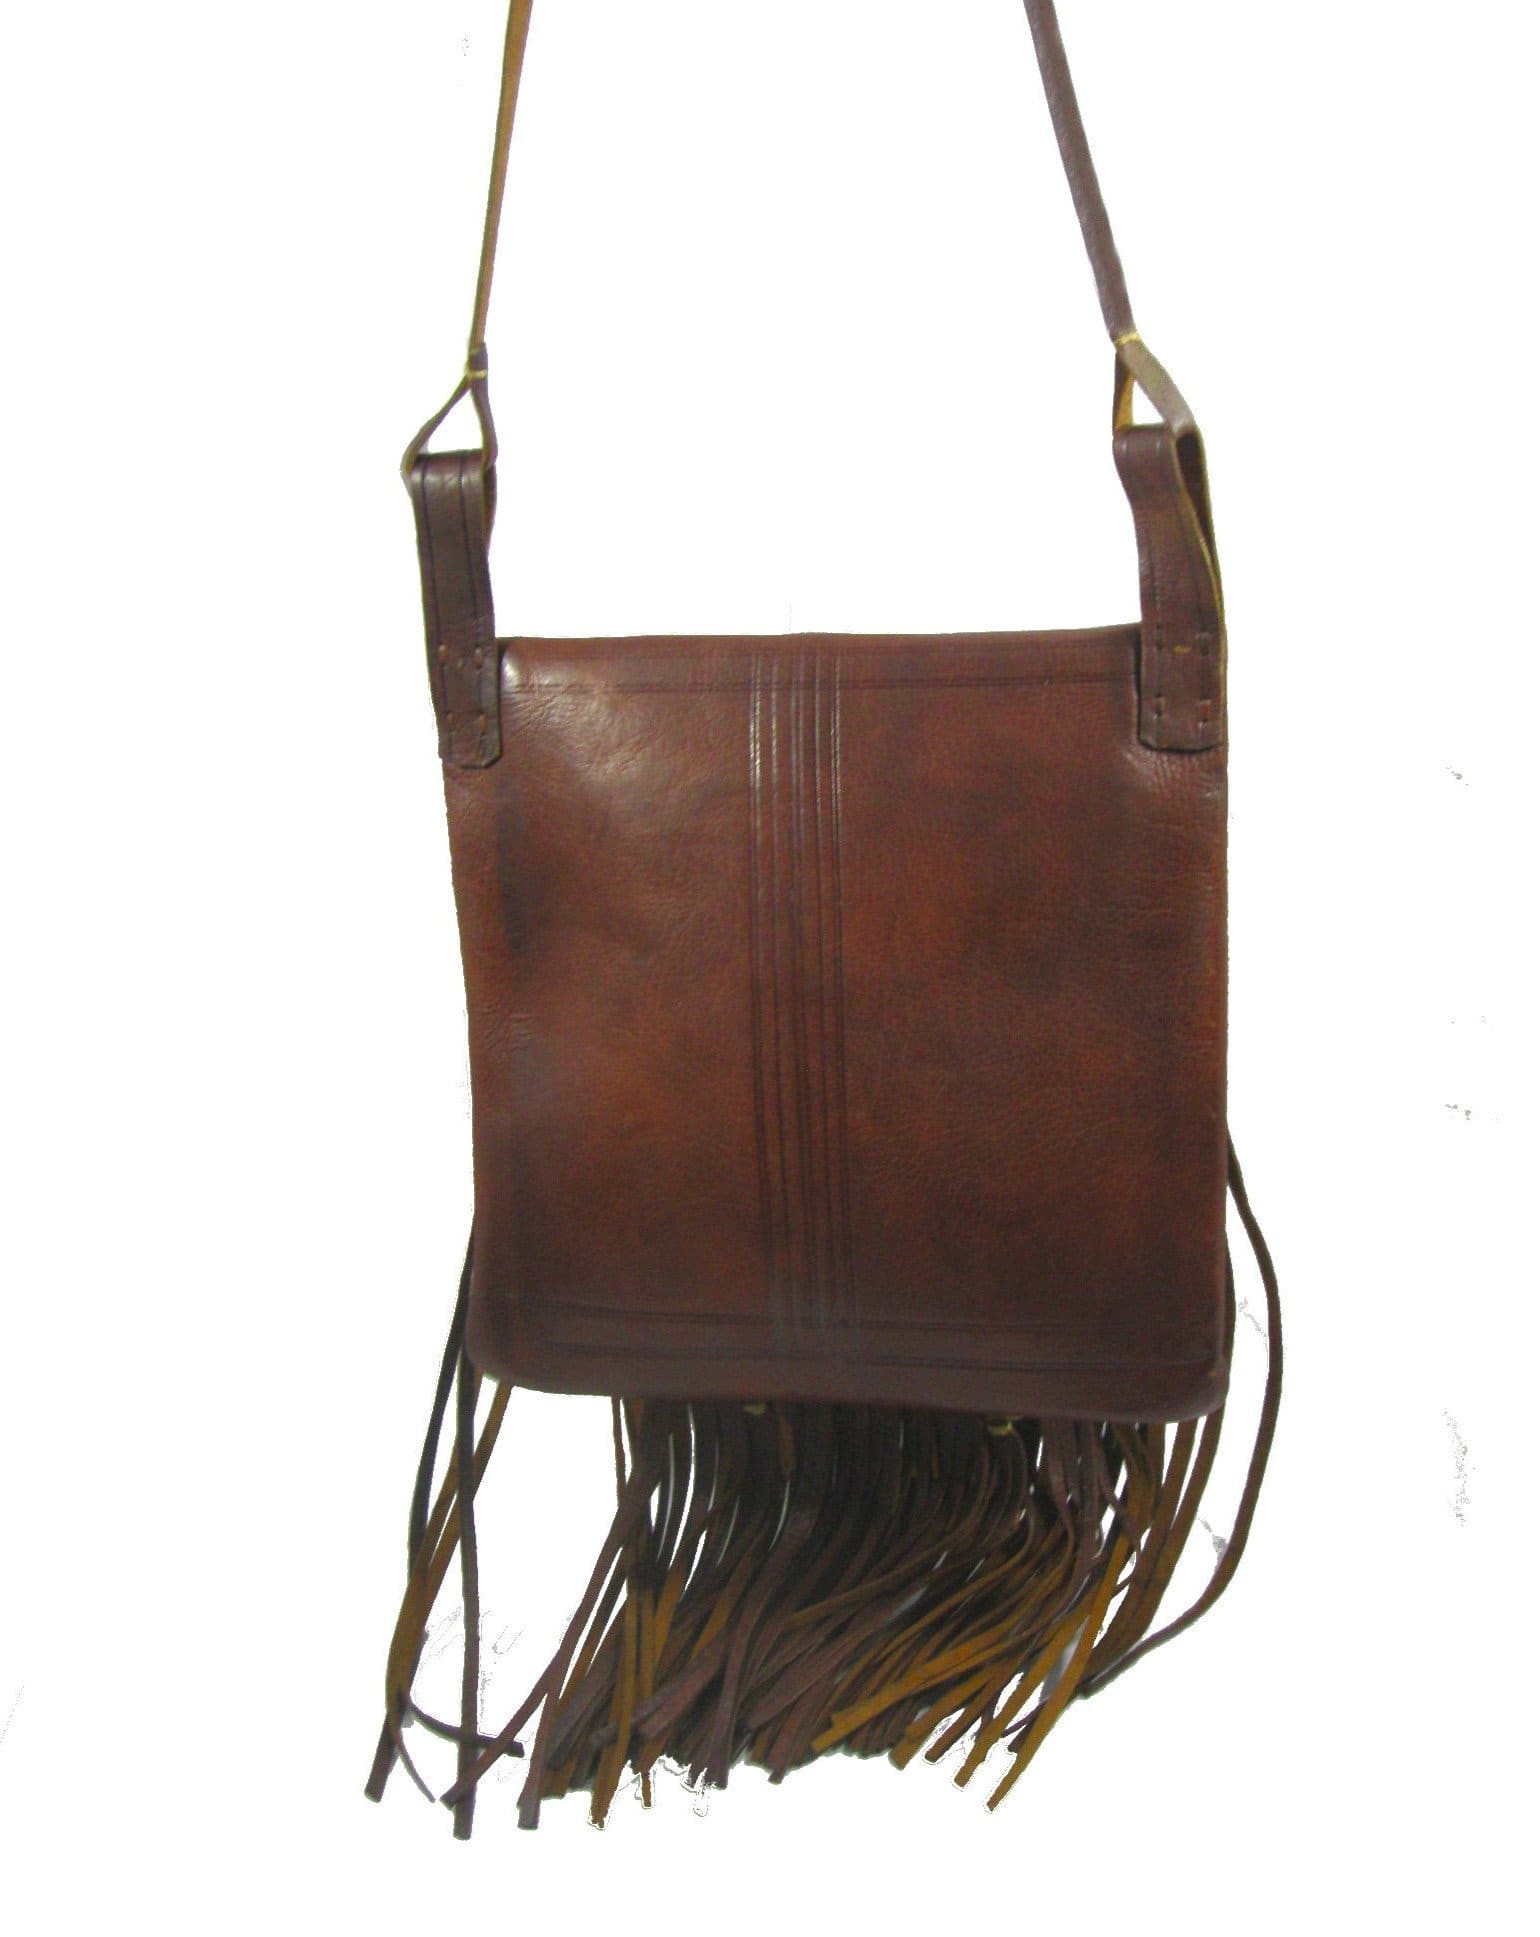 Embossed Genuine Leather Handbag - Buy This Boho Purse